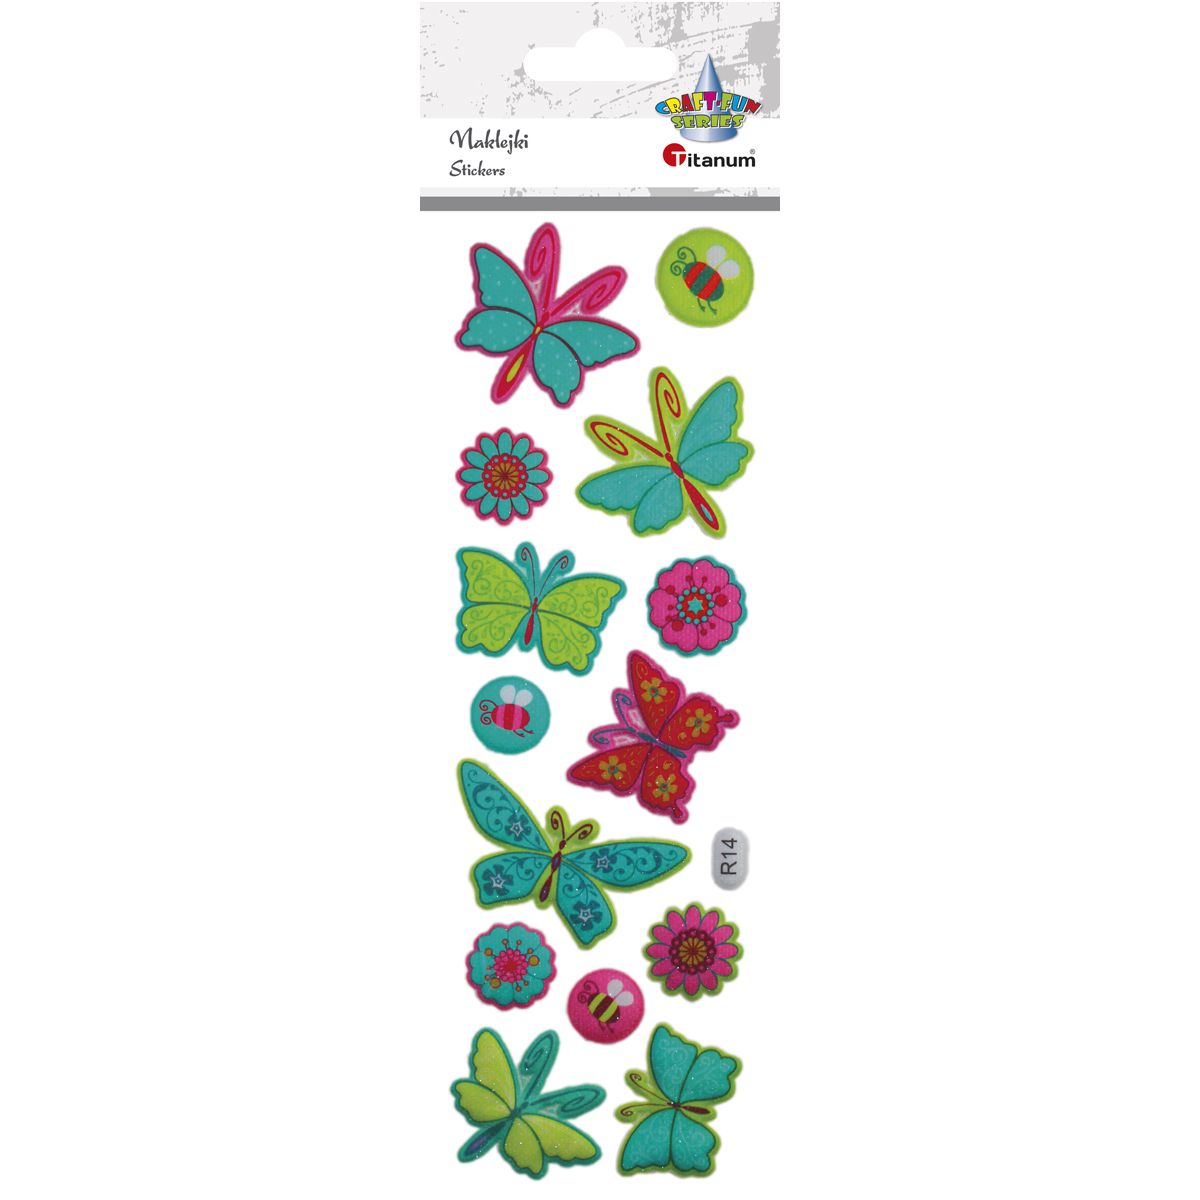 Naklejka (nalepka) Craft-Fun Series motylki, kwiatki Titanum (R14)